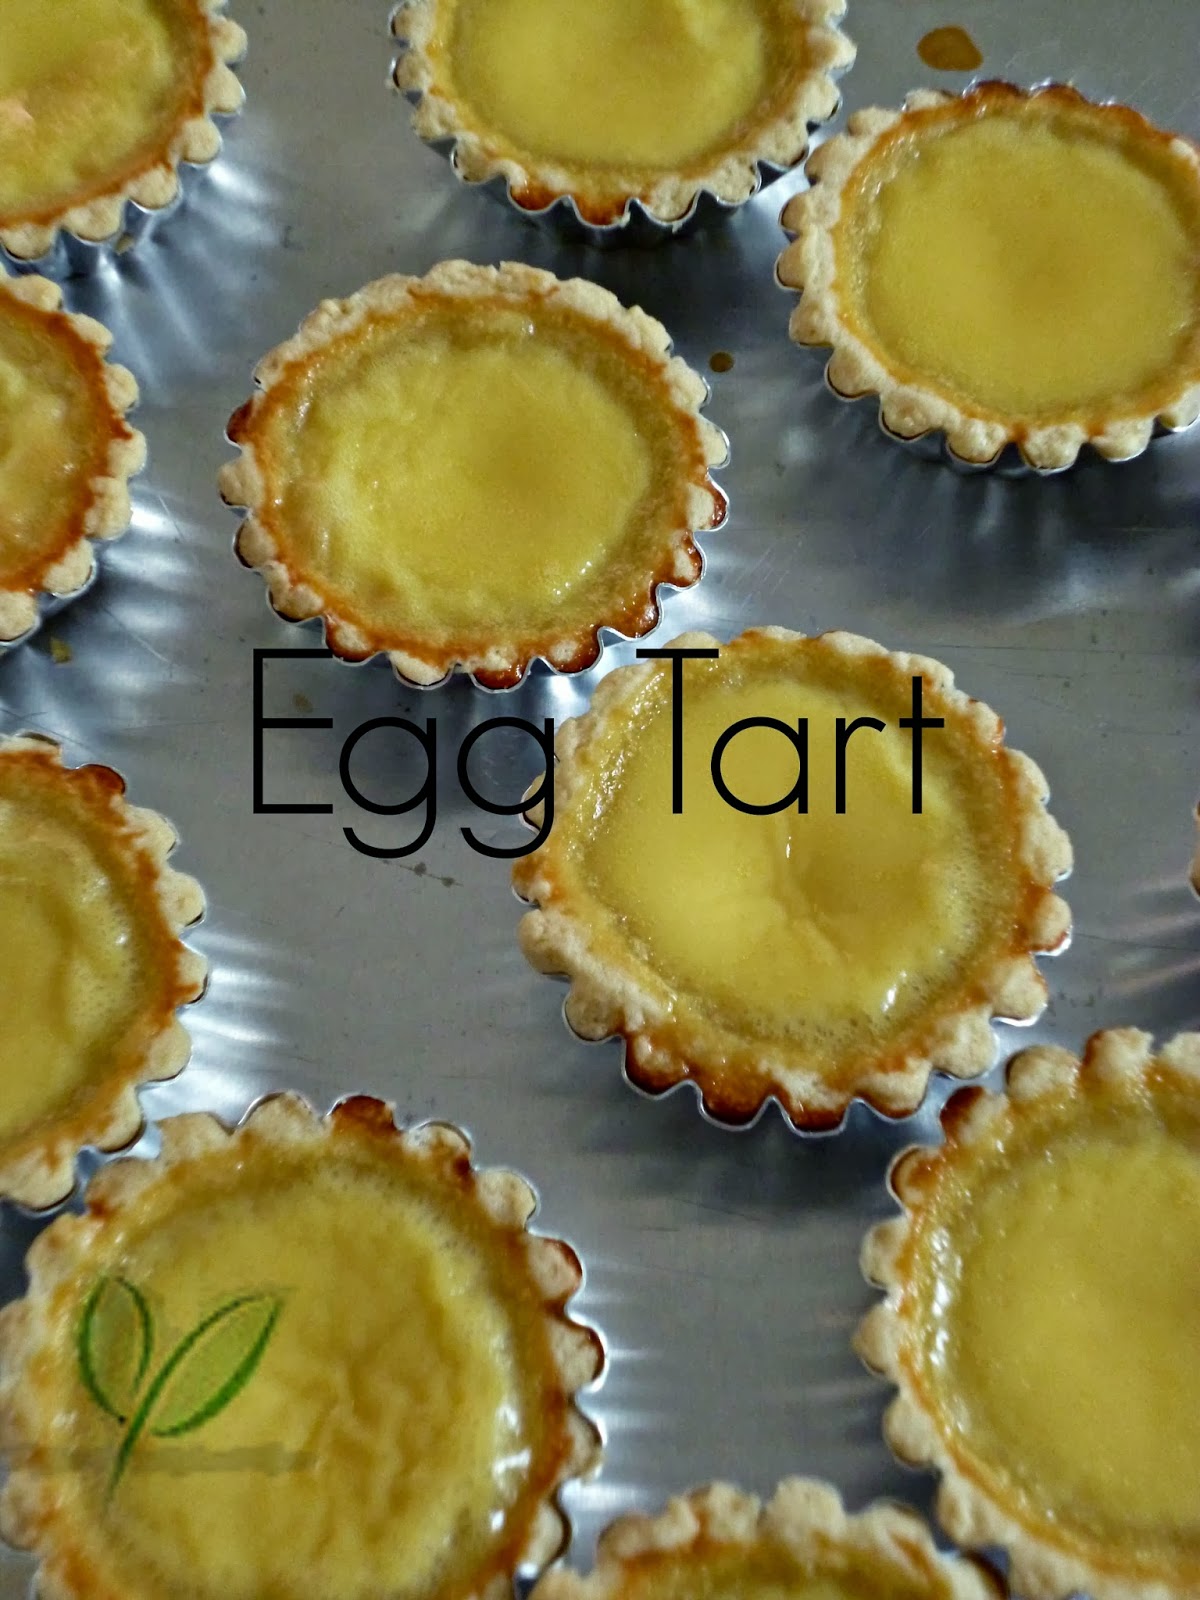 My mintroom: Egg Tart @ Tart Telur